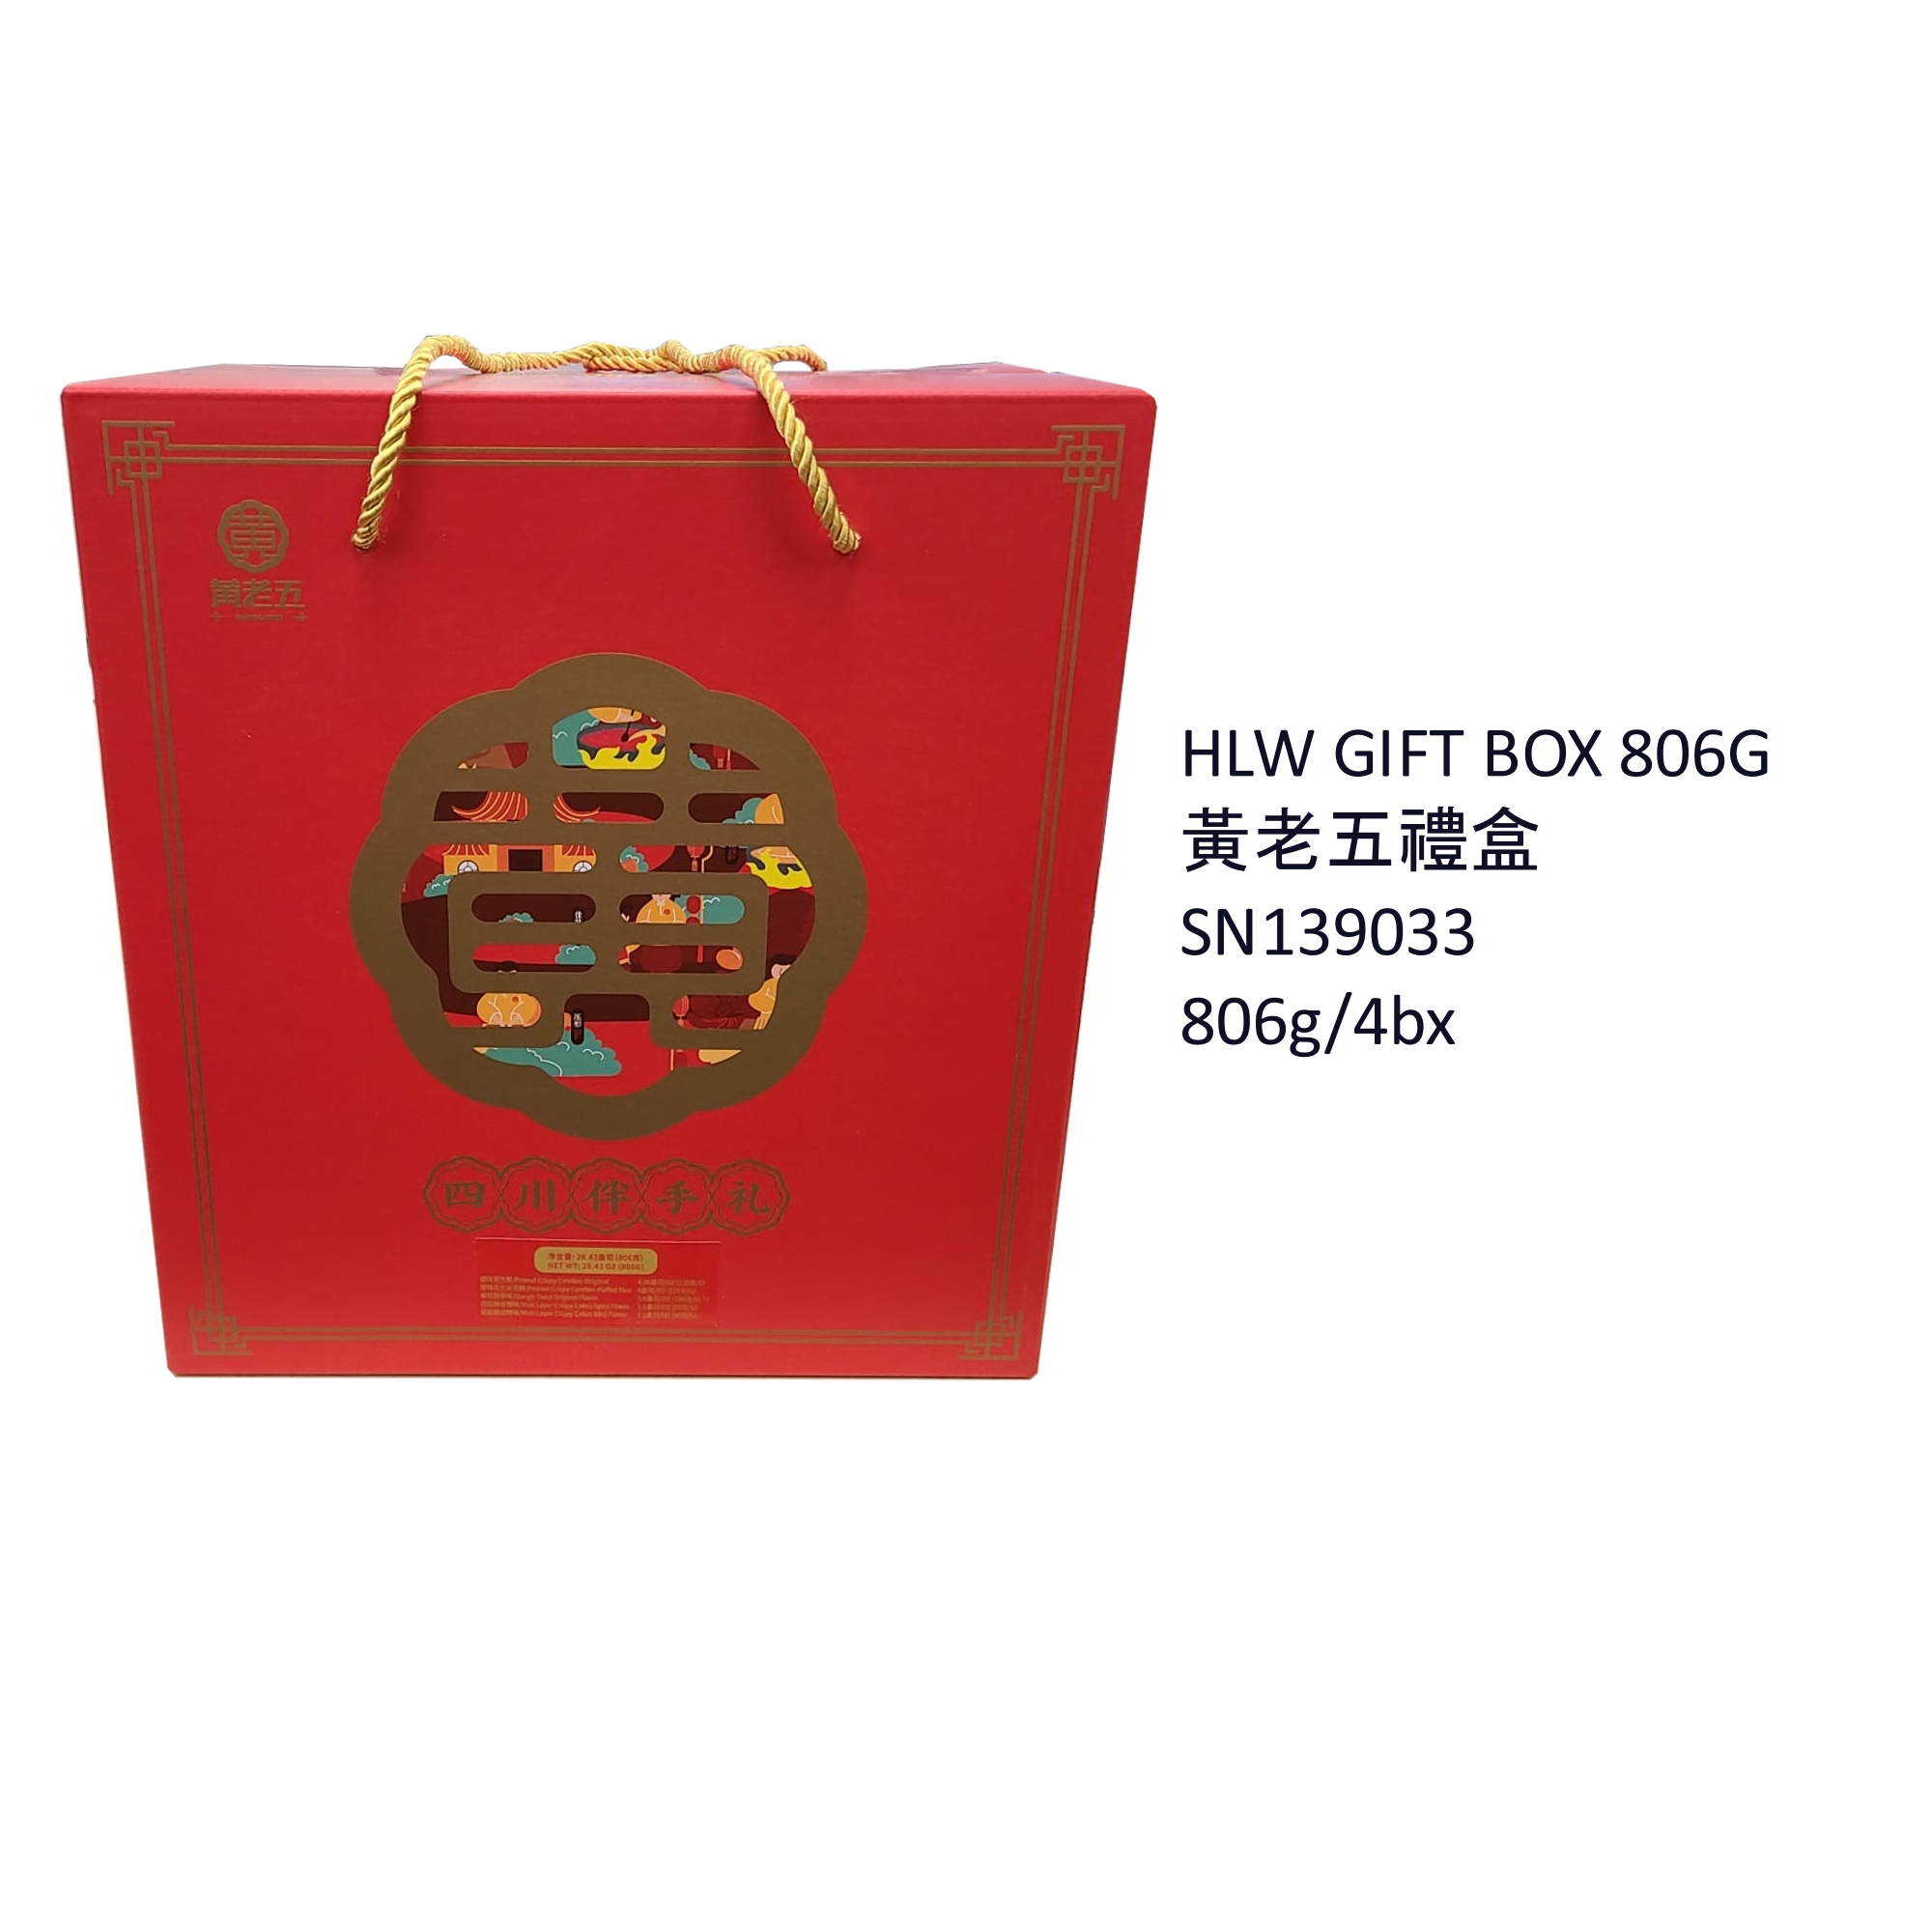 HLW GIFT BOX 806G 黃老五禮盒